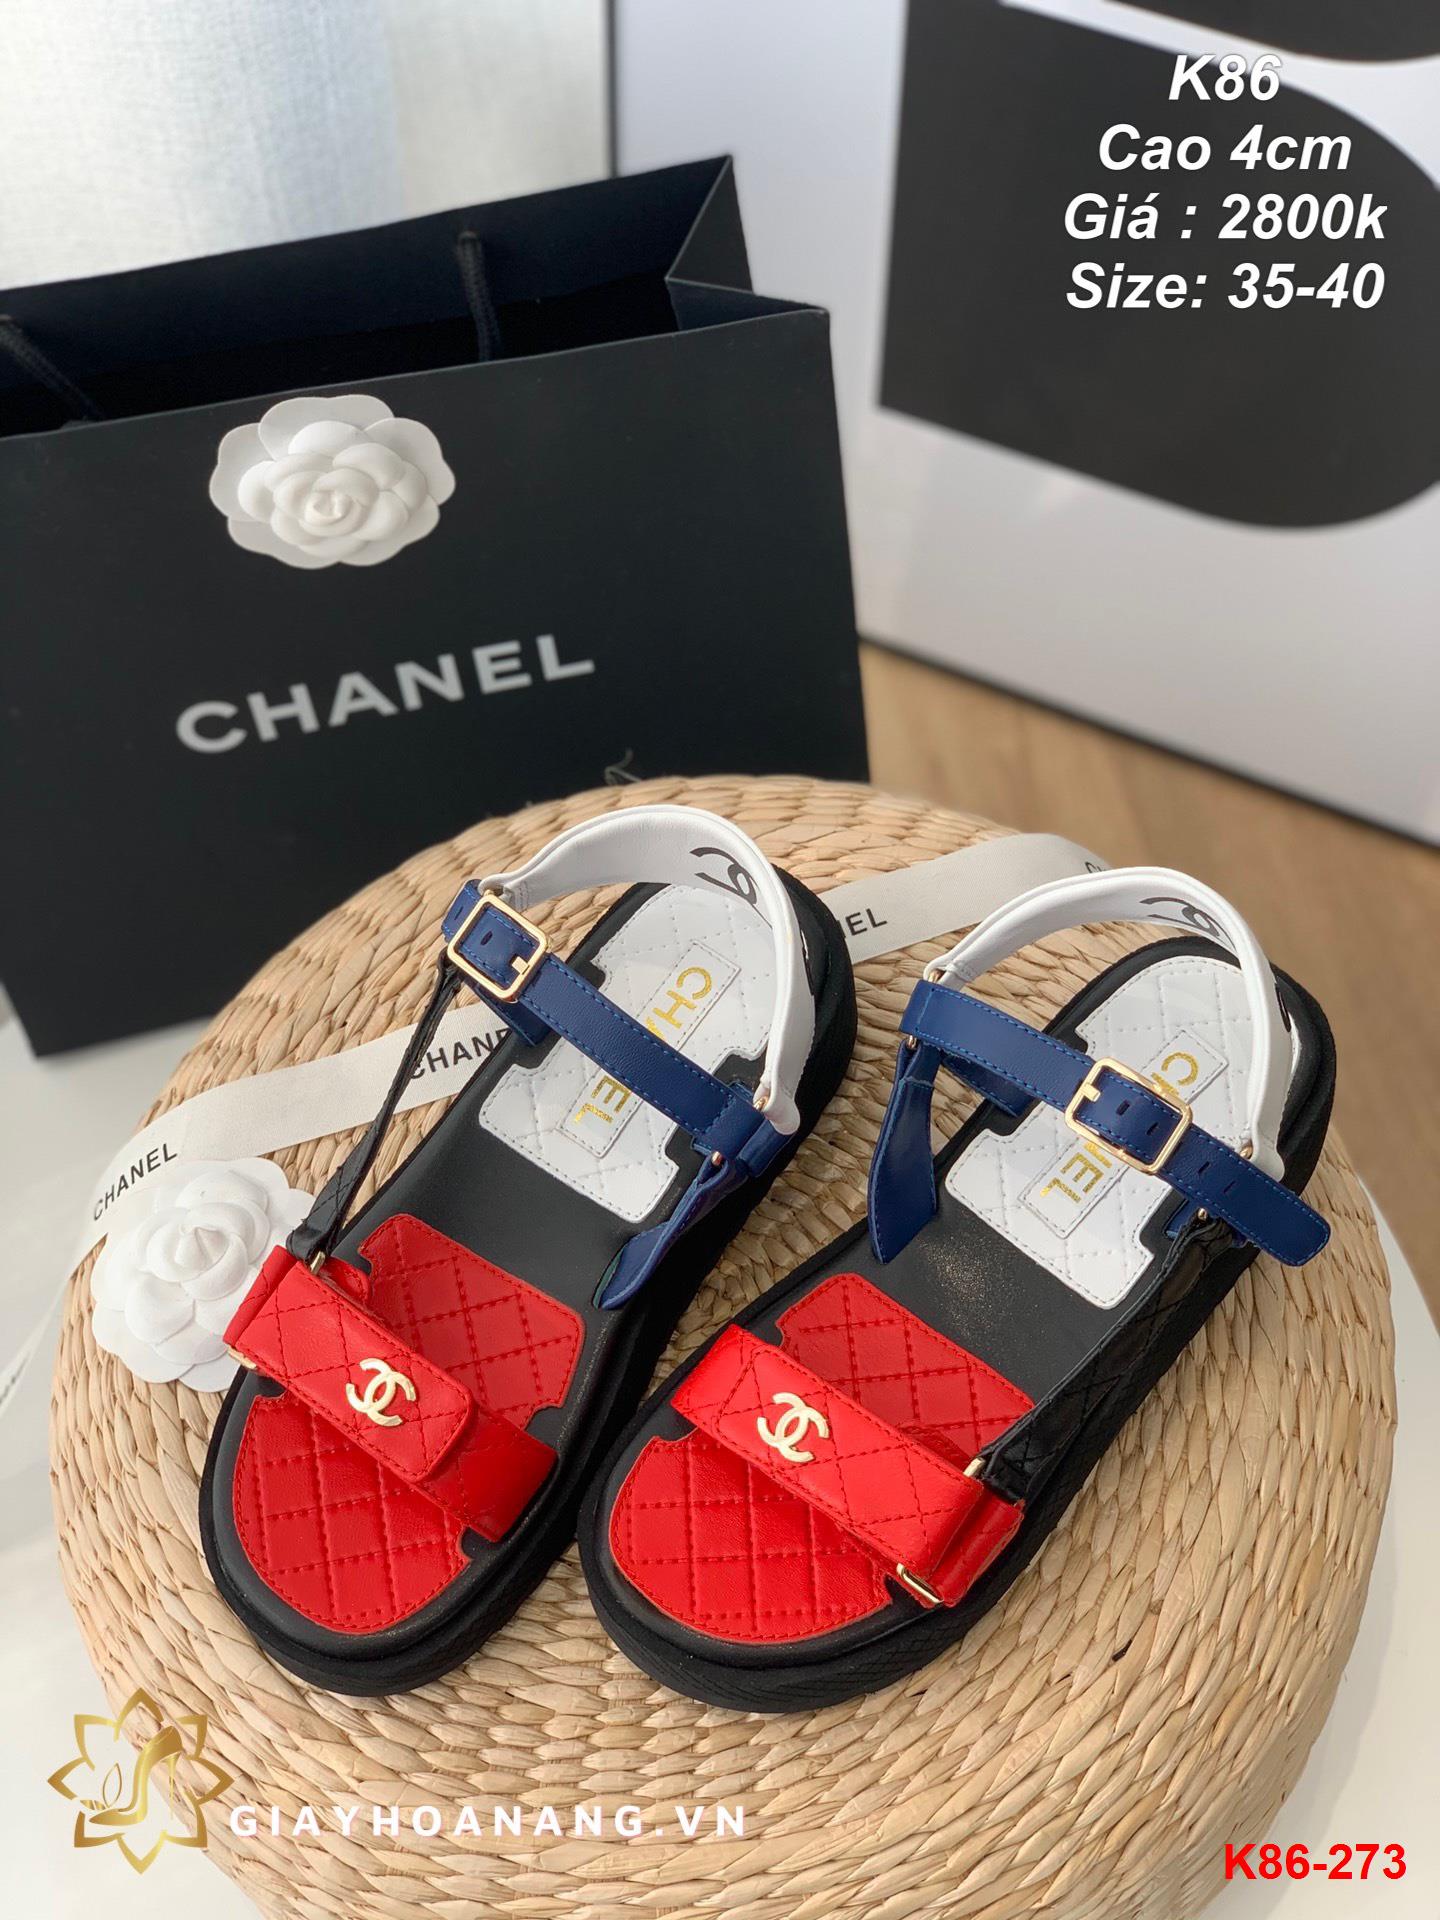 K86-273 Chanel sandal cao 4cm siêu cấp